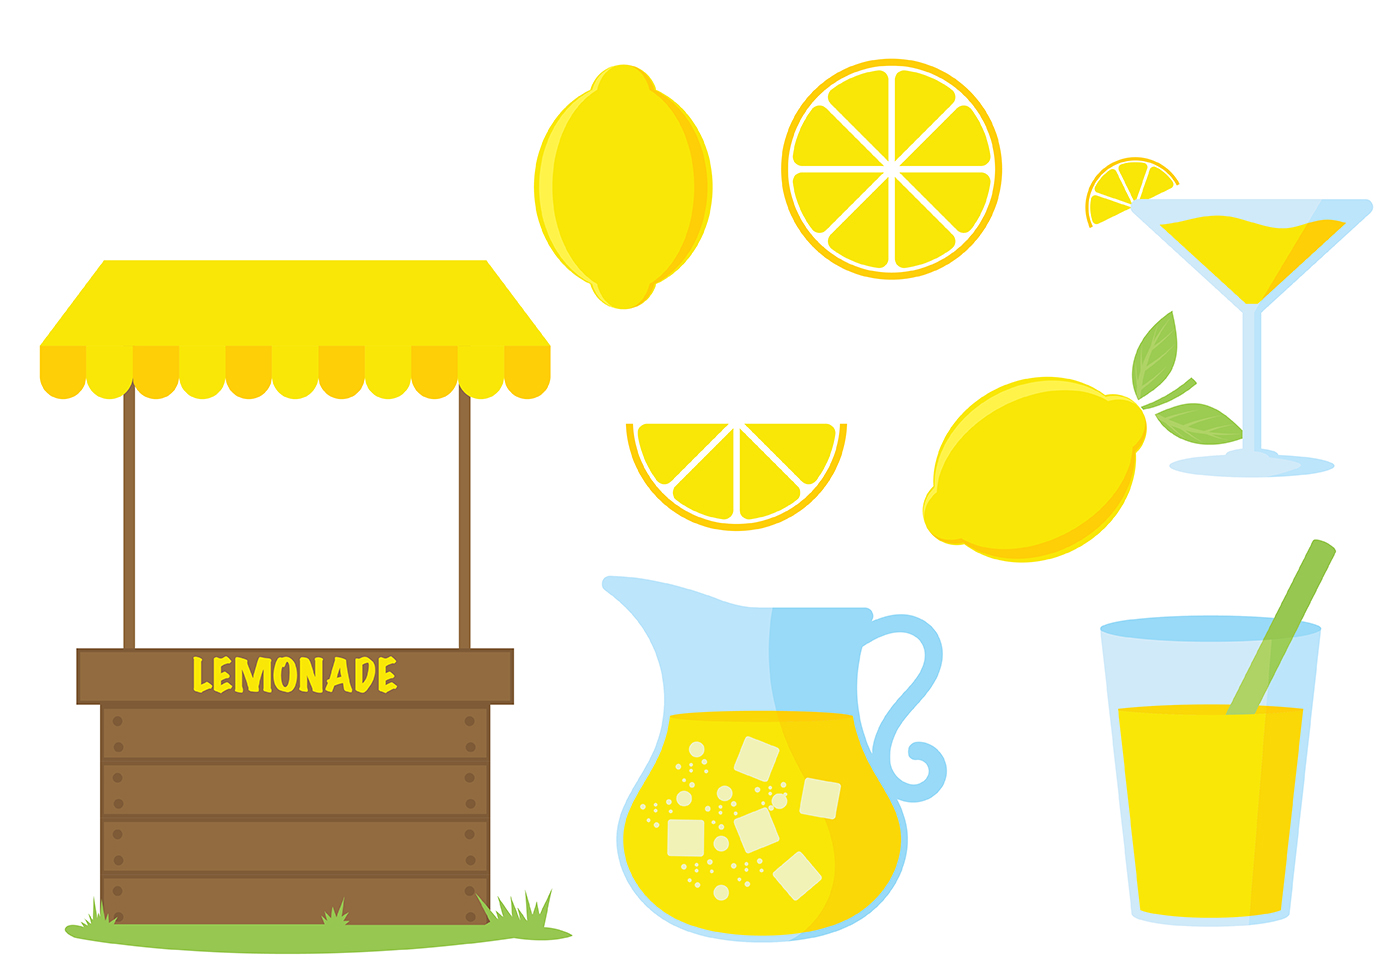 lemonade stand clipart - photo #9